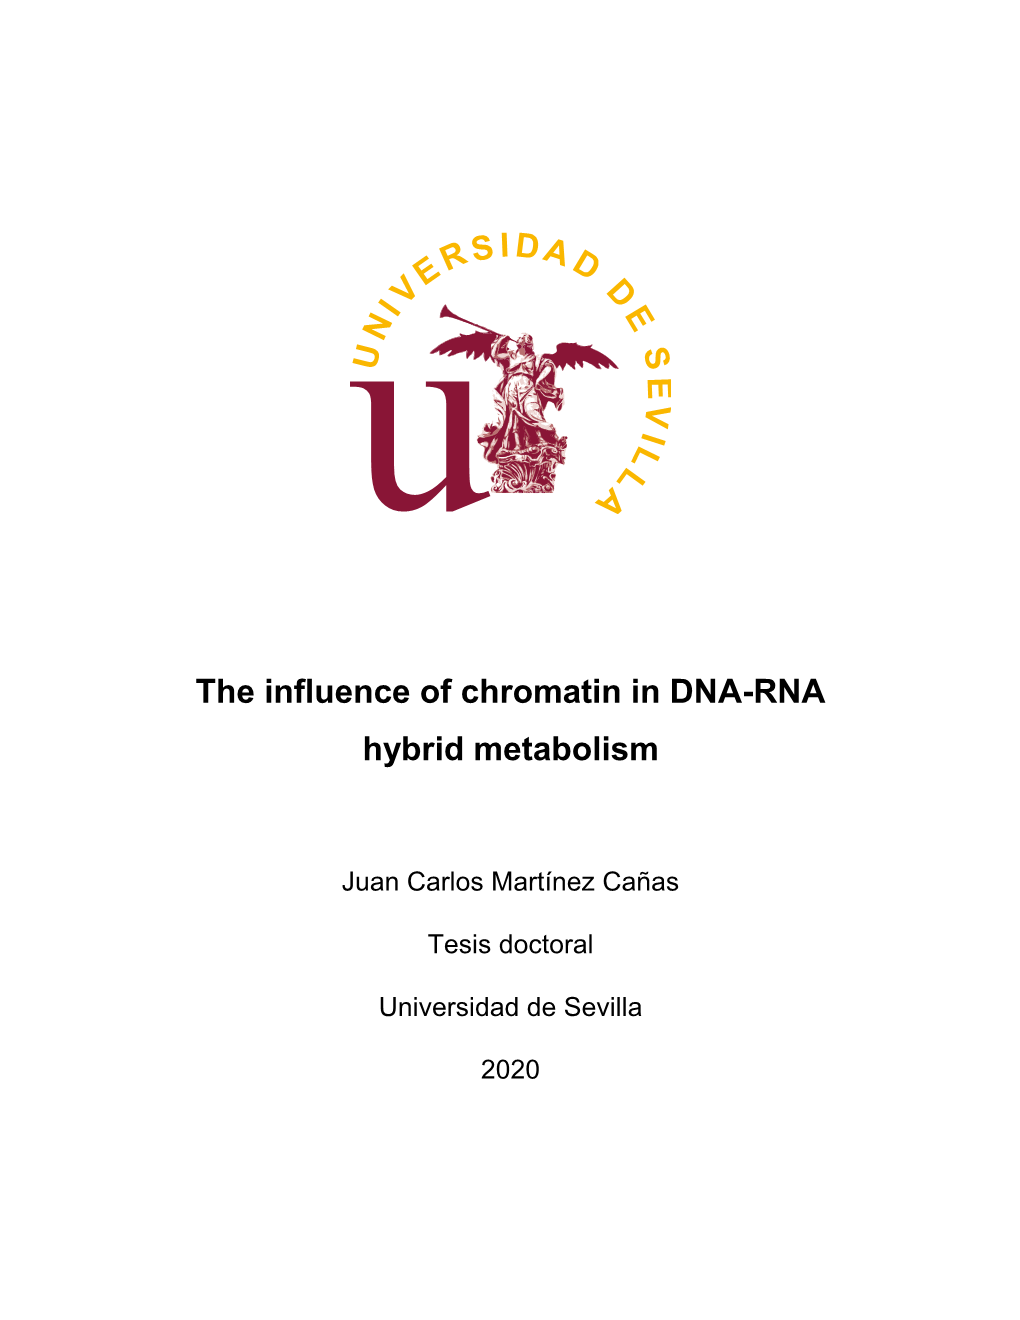 The Influence of Chromatin in DNA-RNA Hybrid Metabolism